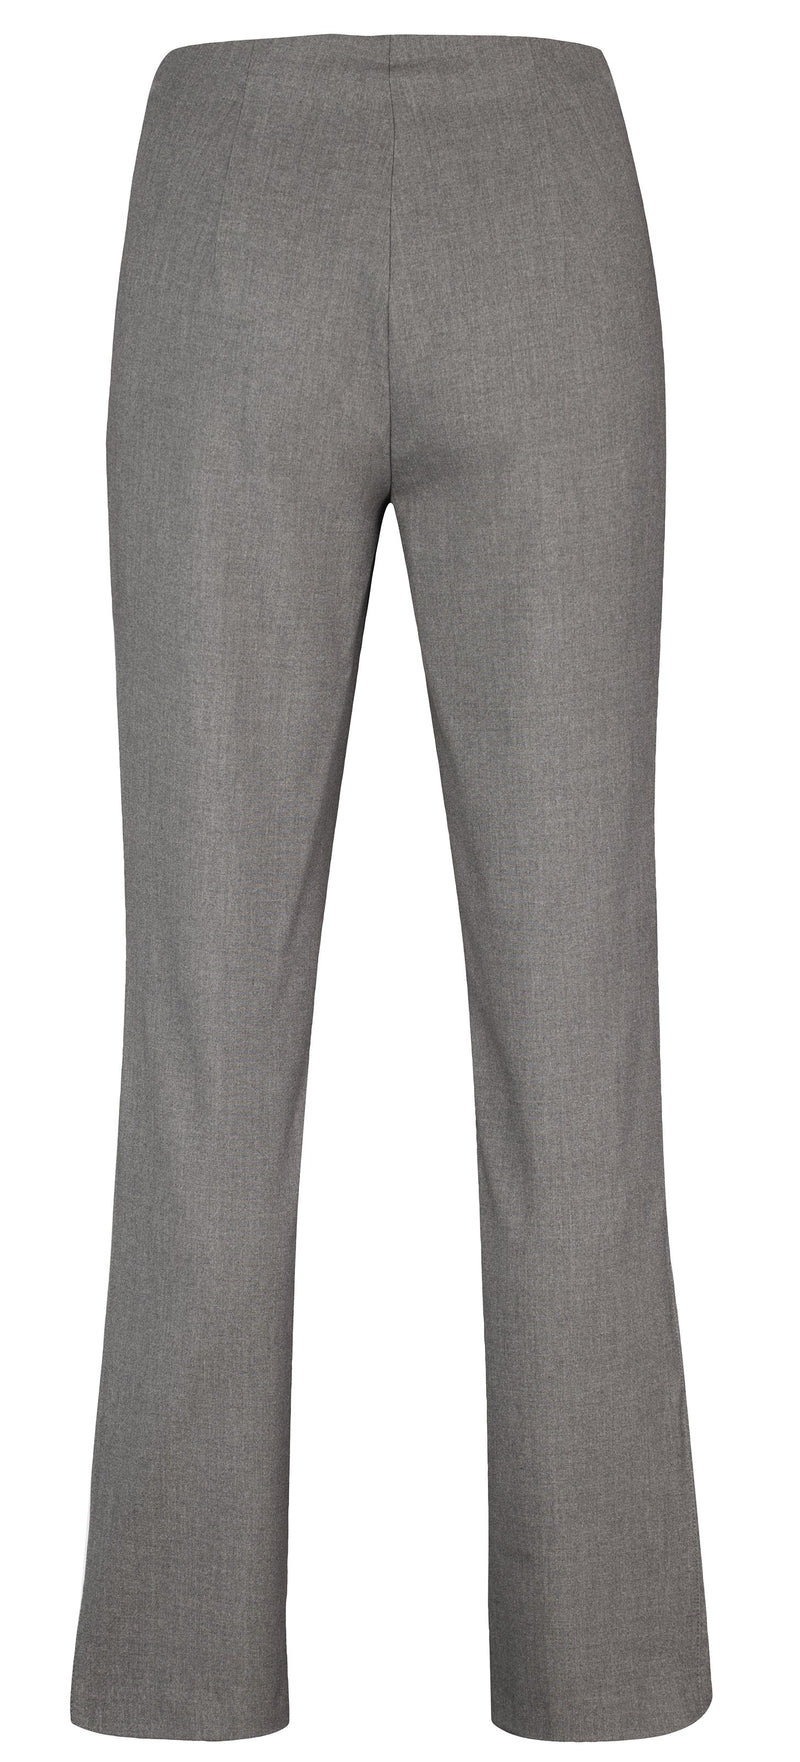 Jacklyn Full Length Trouser - Elephant Grey